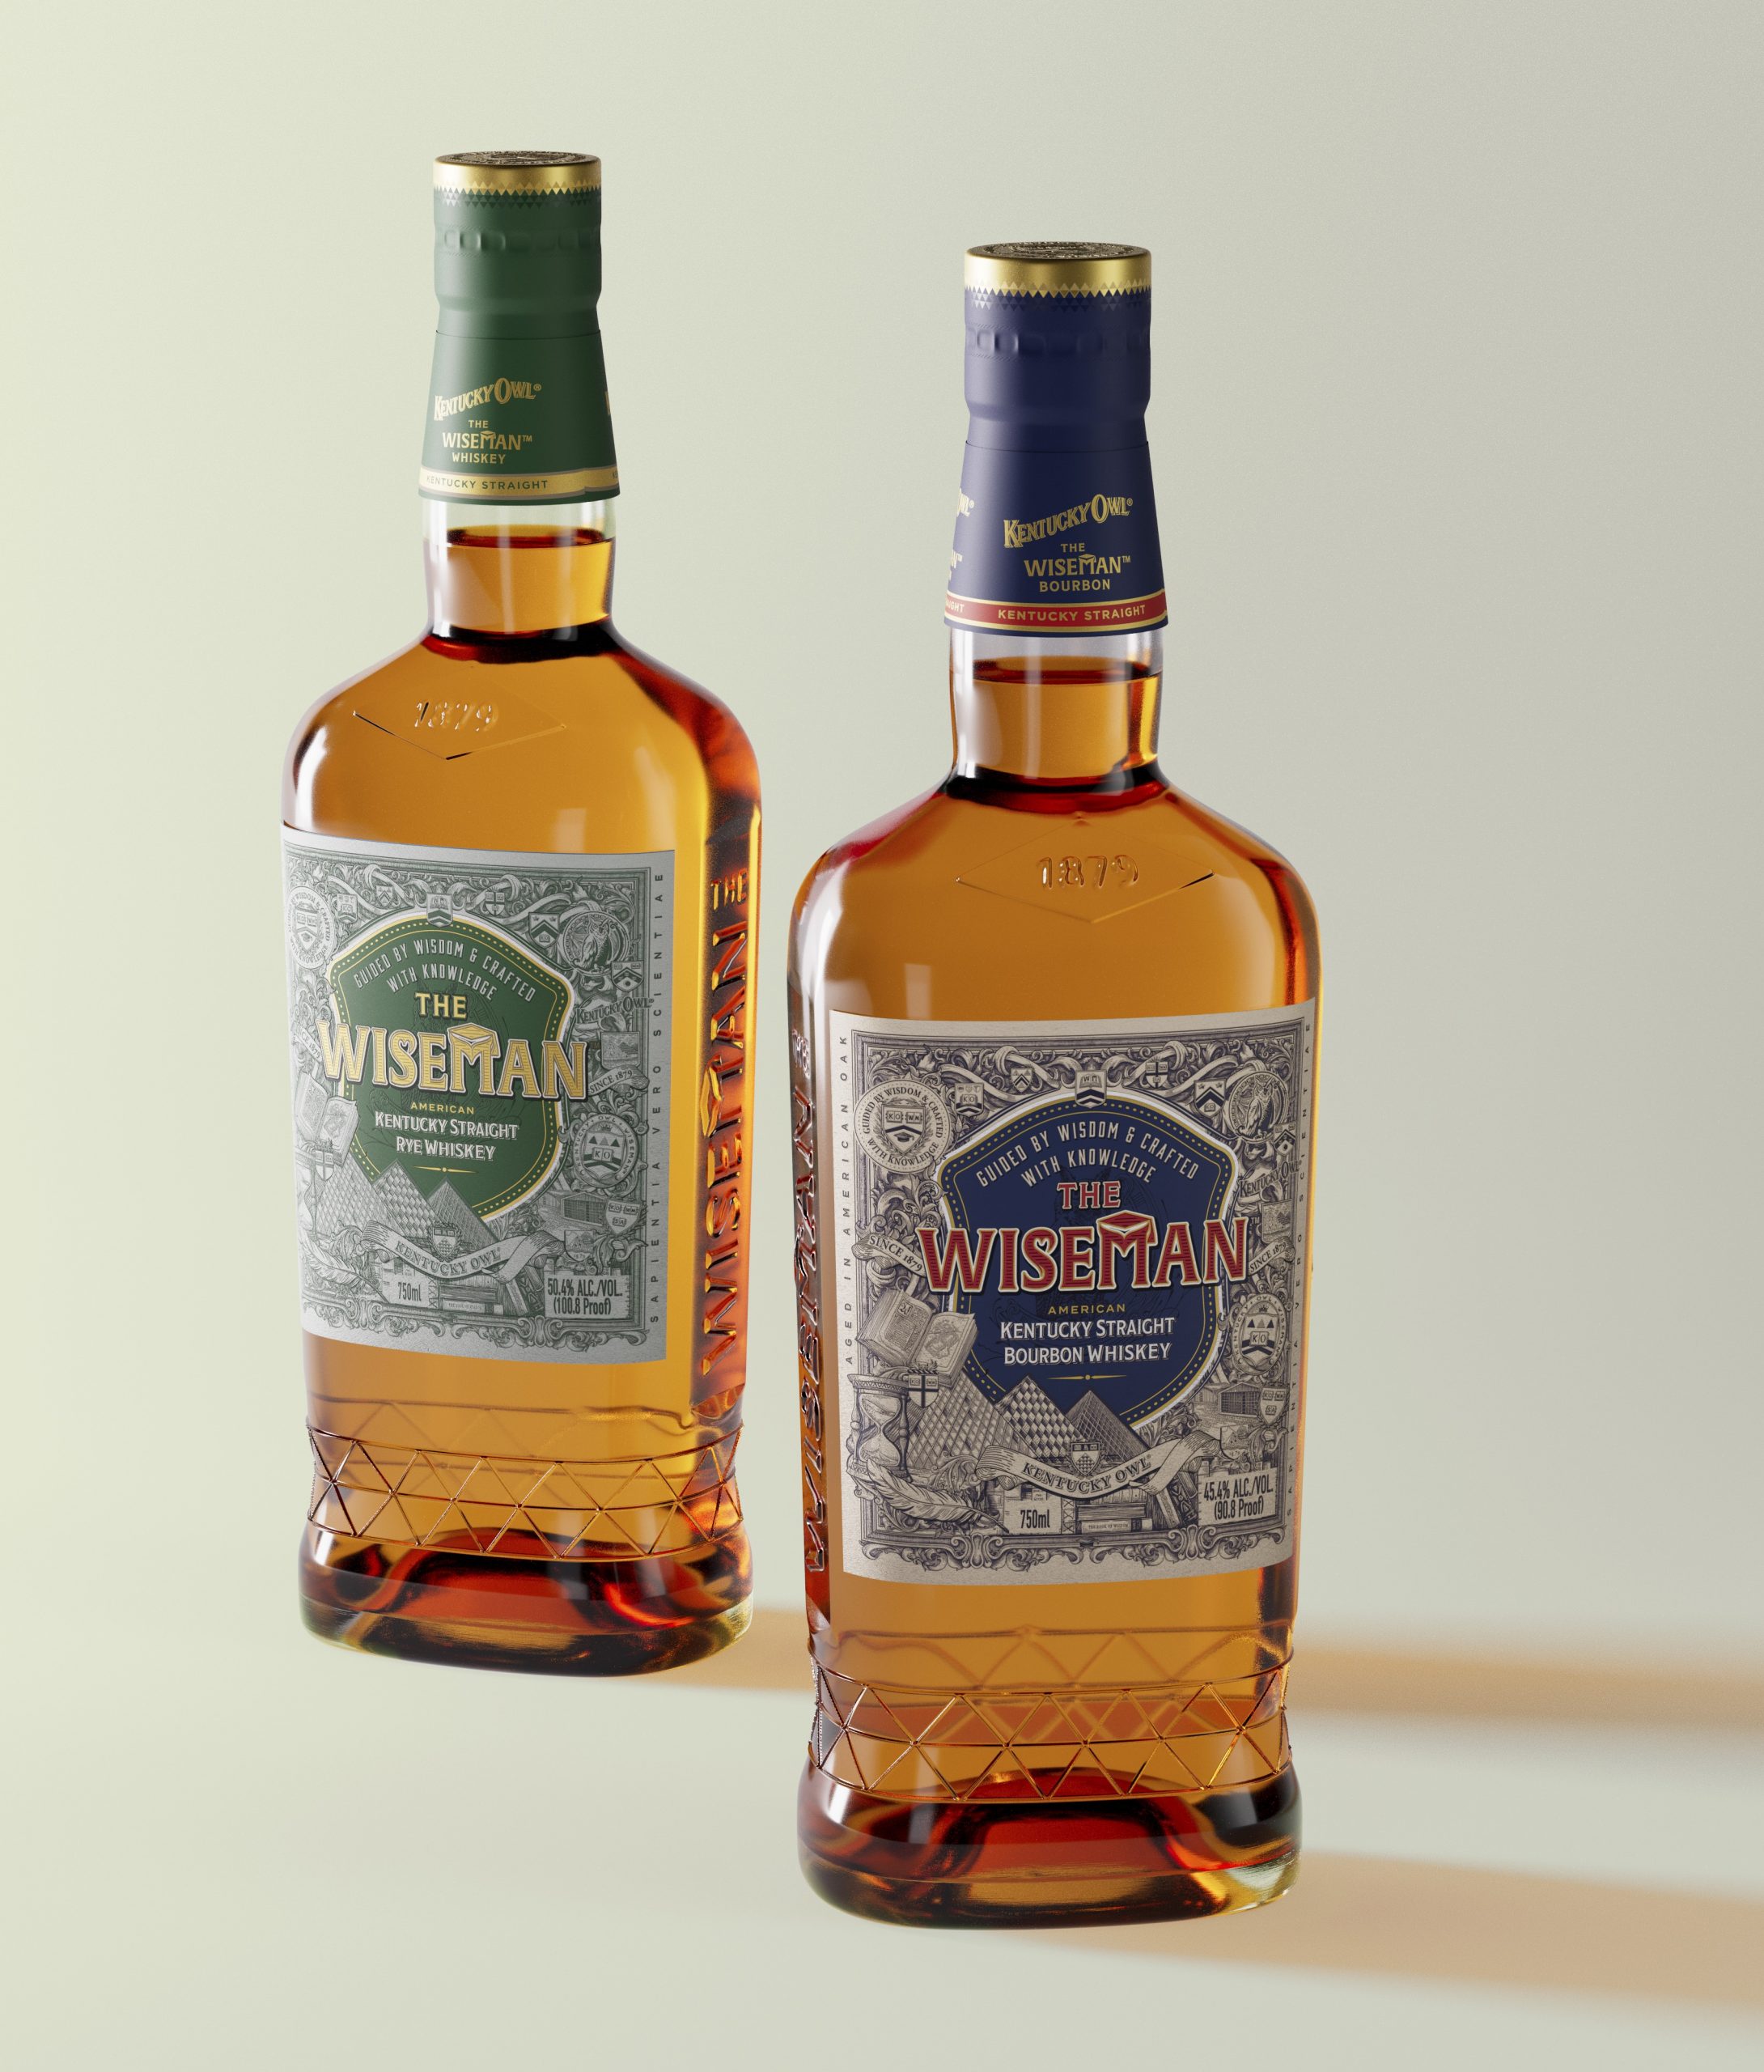 Kentucky Owl The Wiseman Rye Whiskey and Bourbon Whiskey